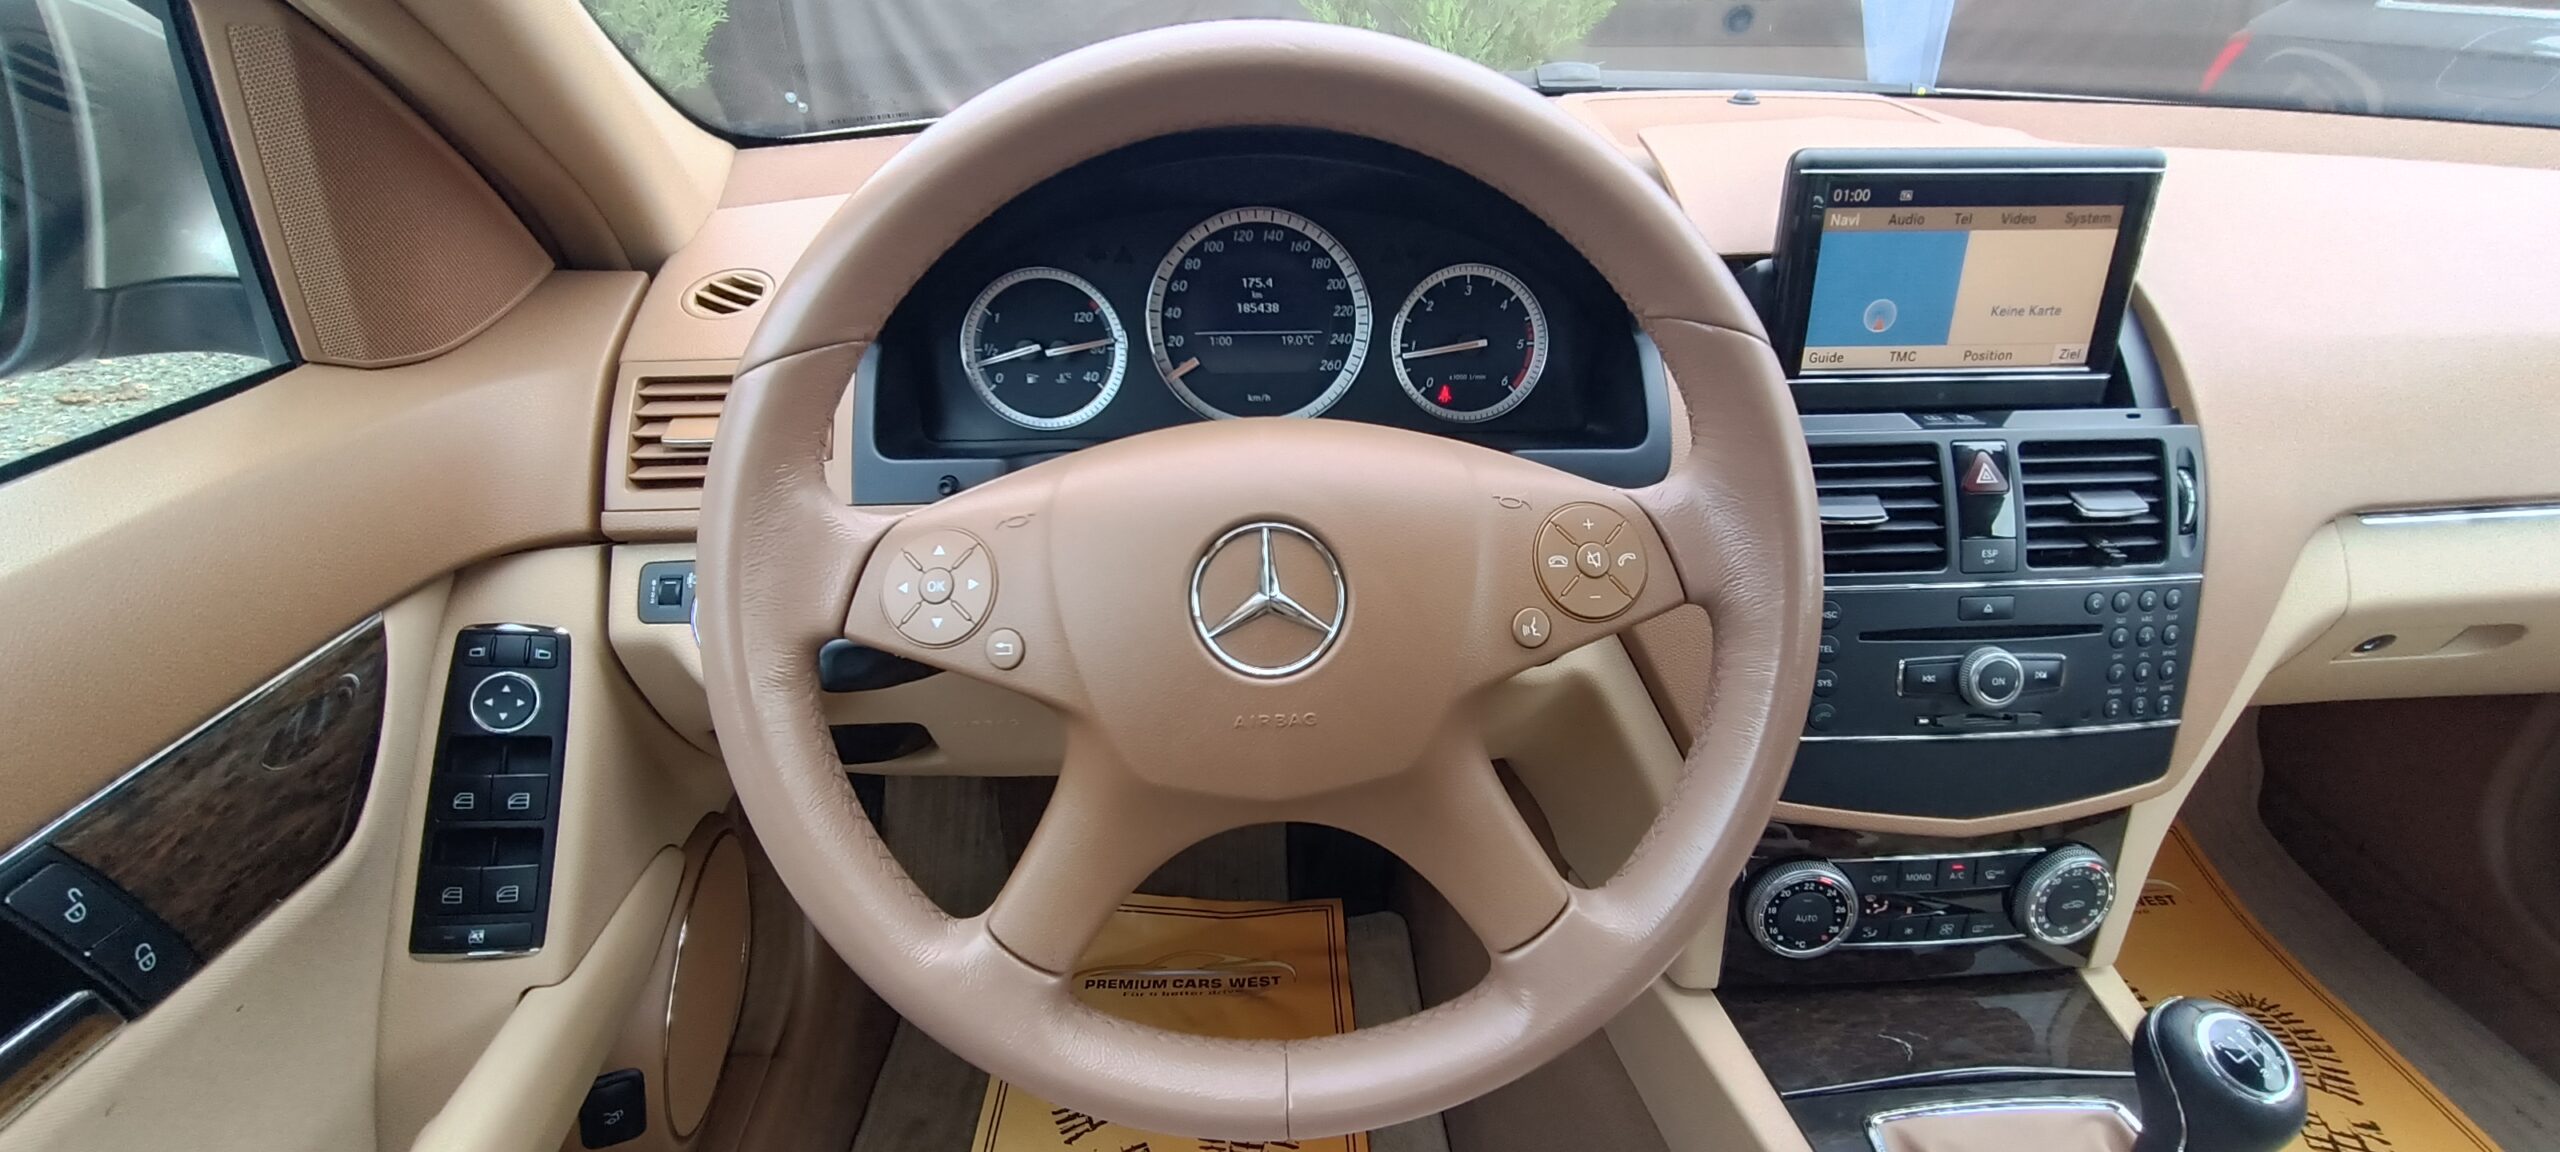 Mercedes C200 CDI